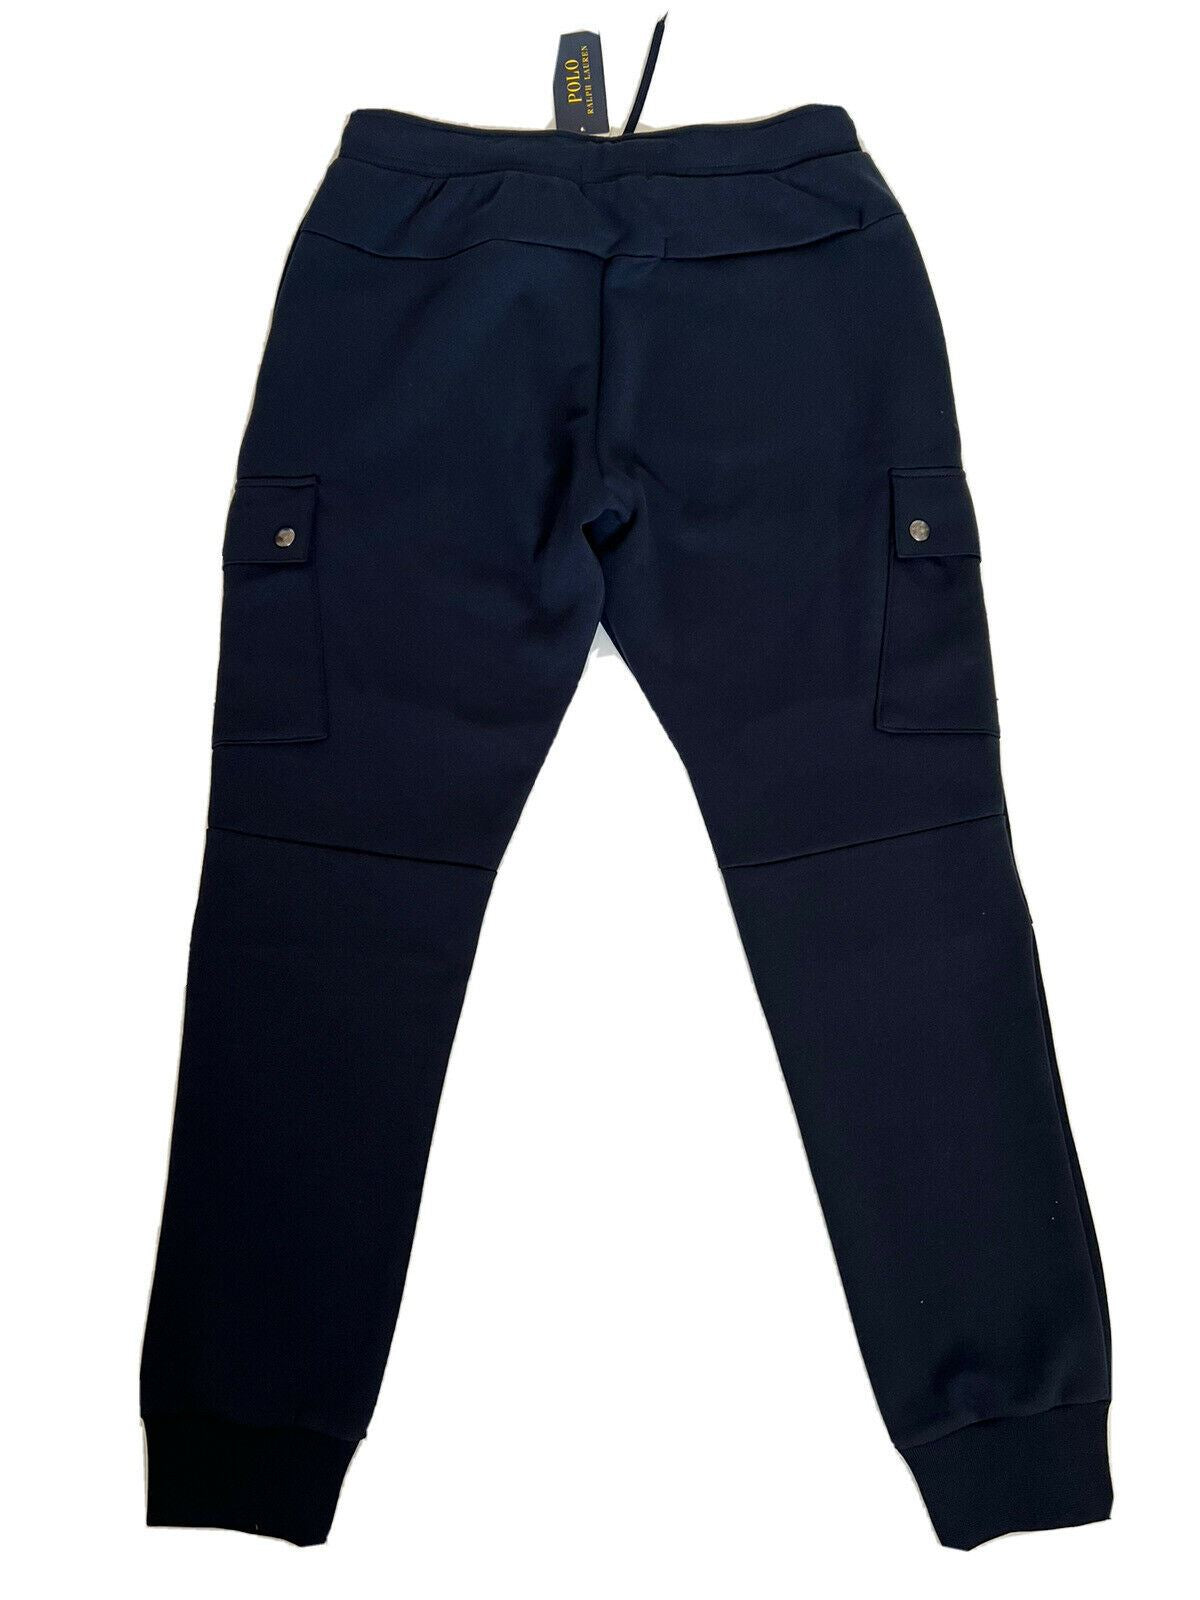 NWT $148 Polo Ralph Lauren Men's Pocket Aviator Navy Casual Pants Small